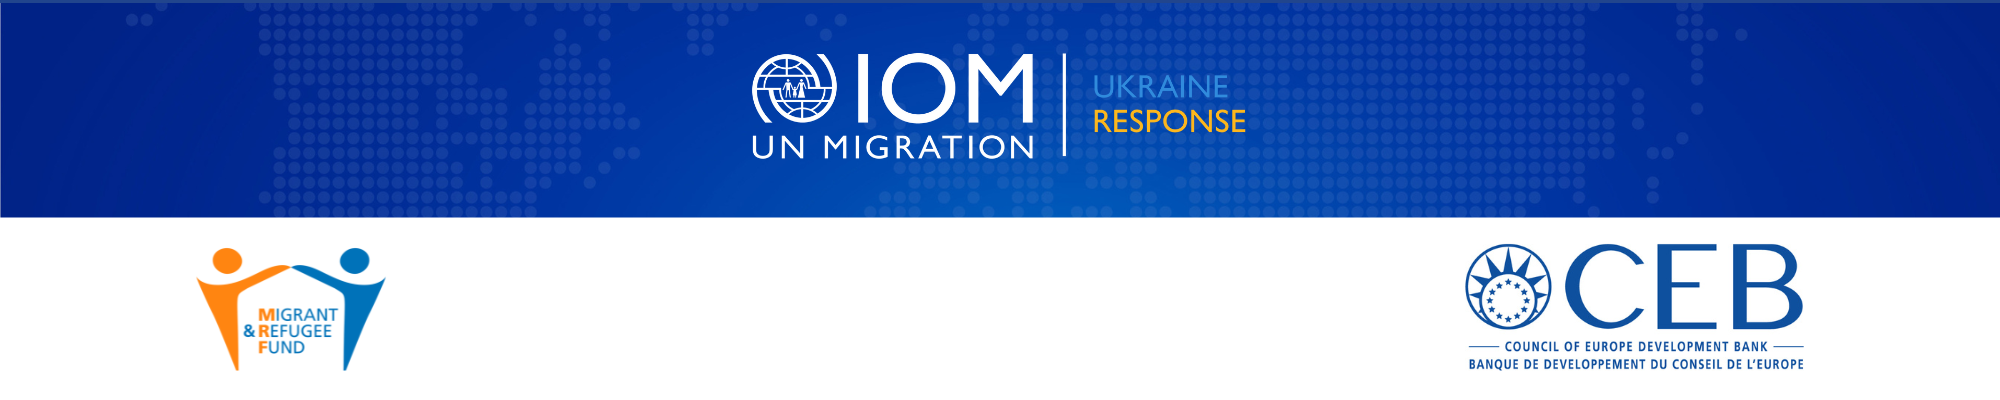 Ukraine Response banner